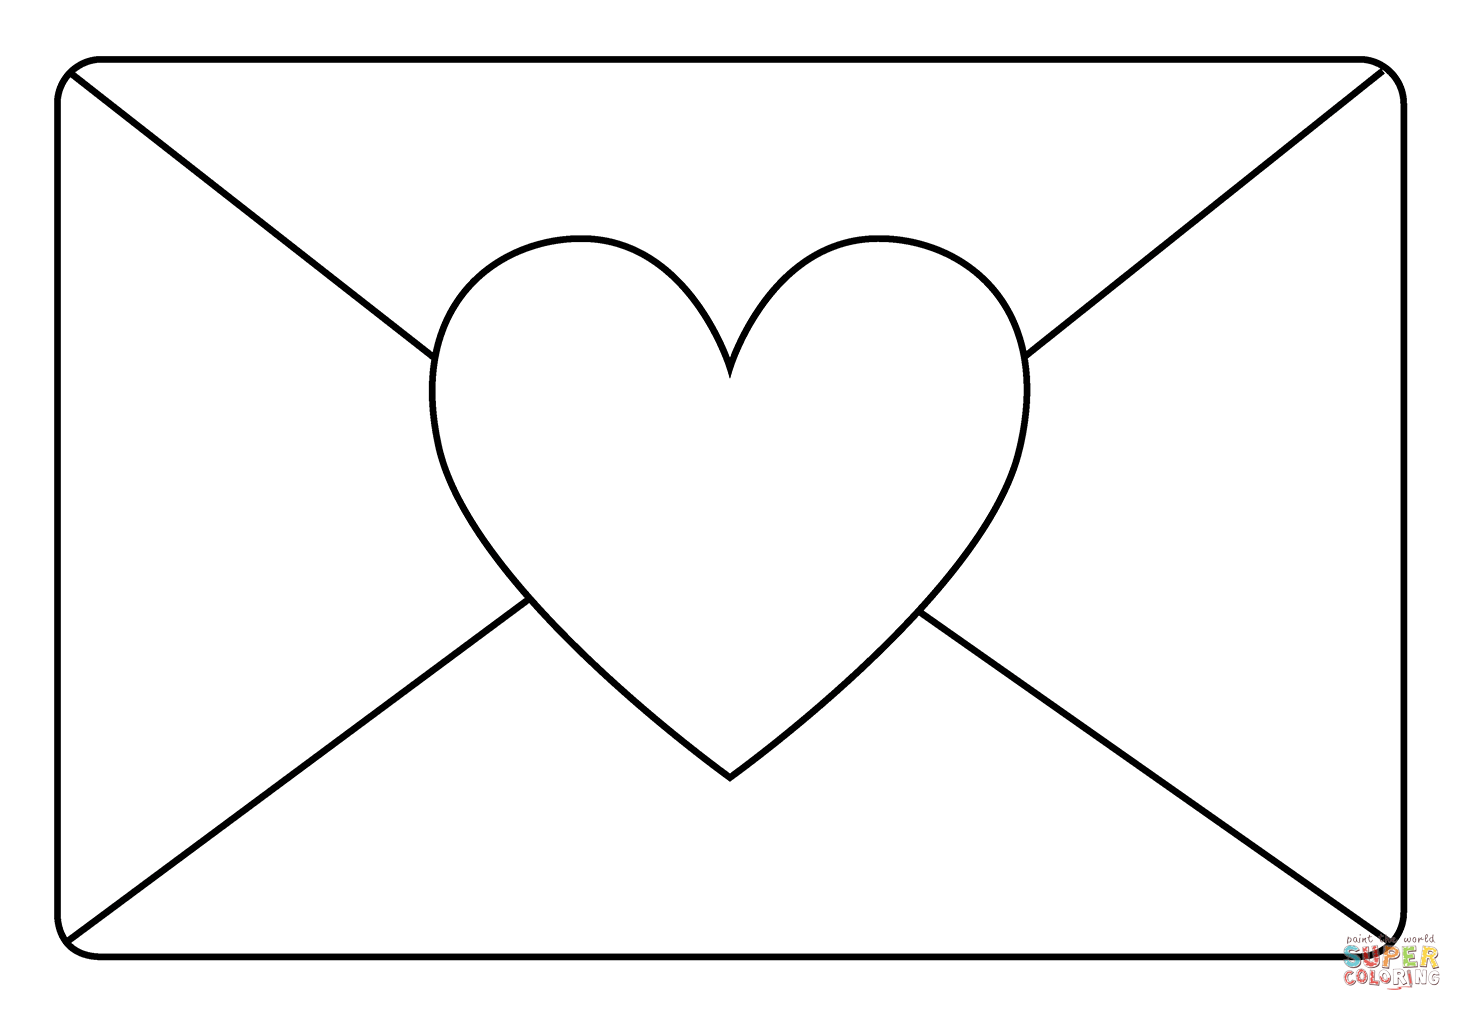 Love letter emoji